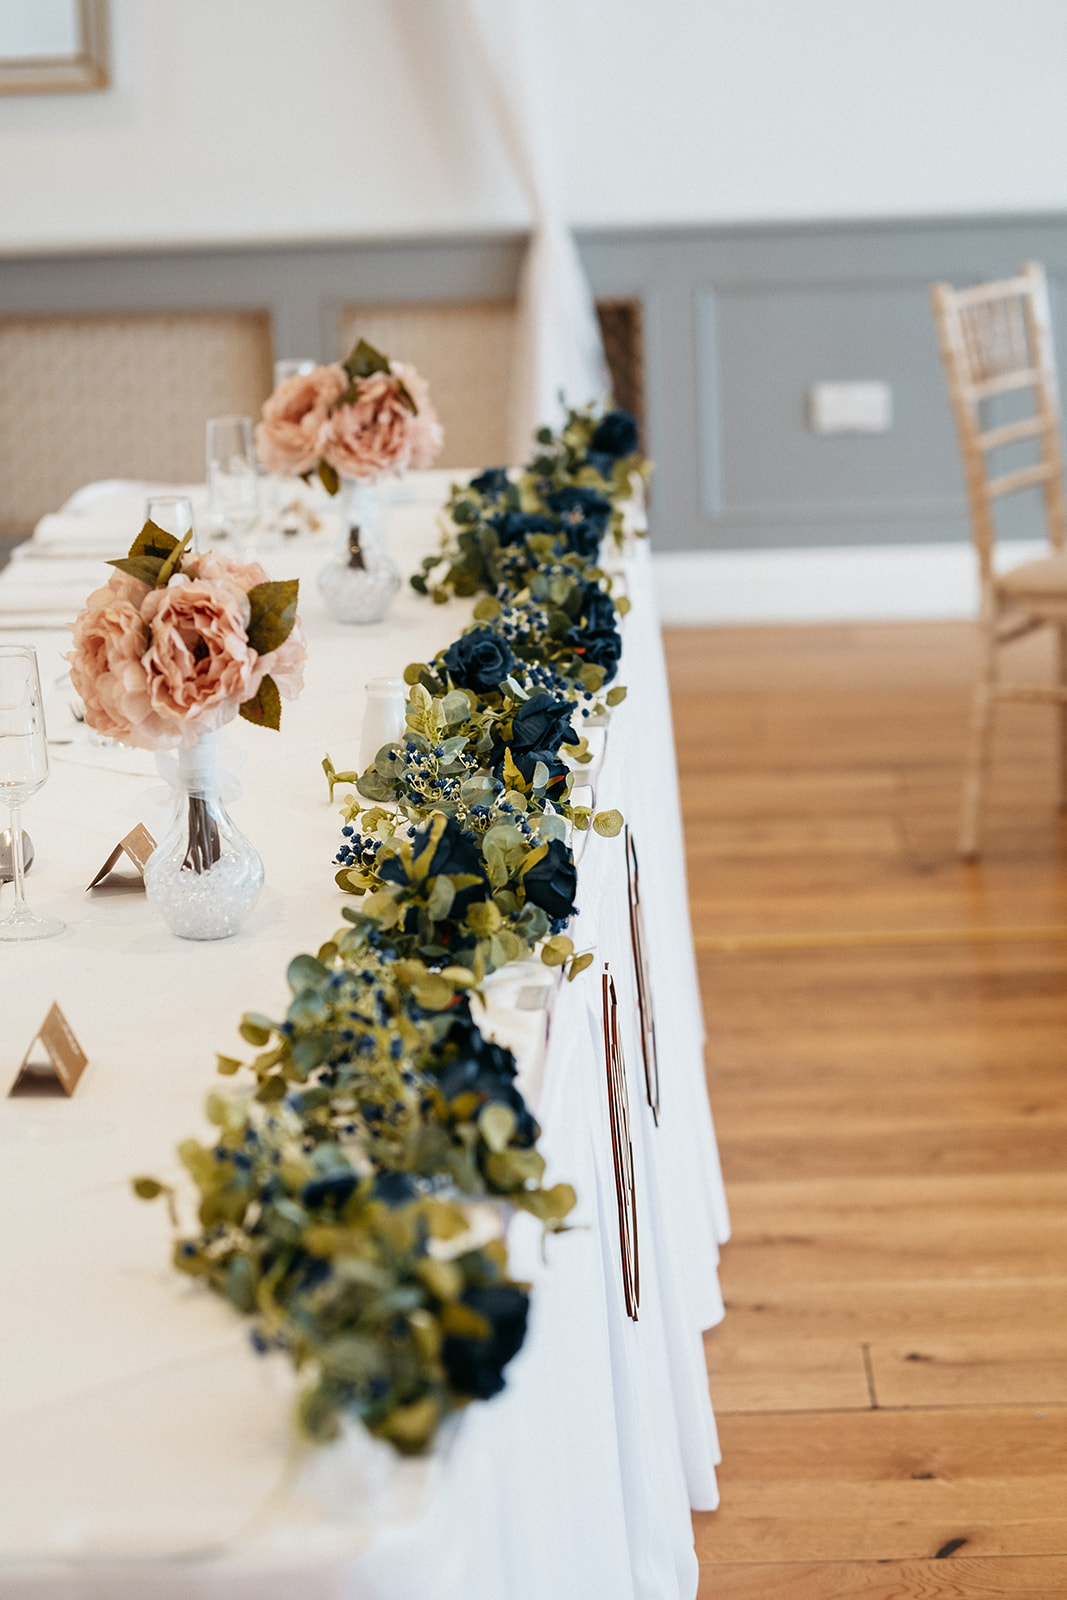 Top table ideas for a wedding